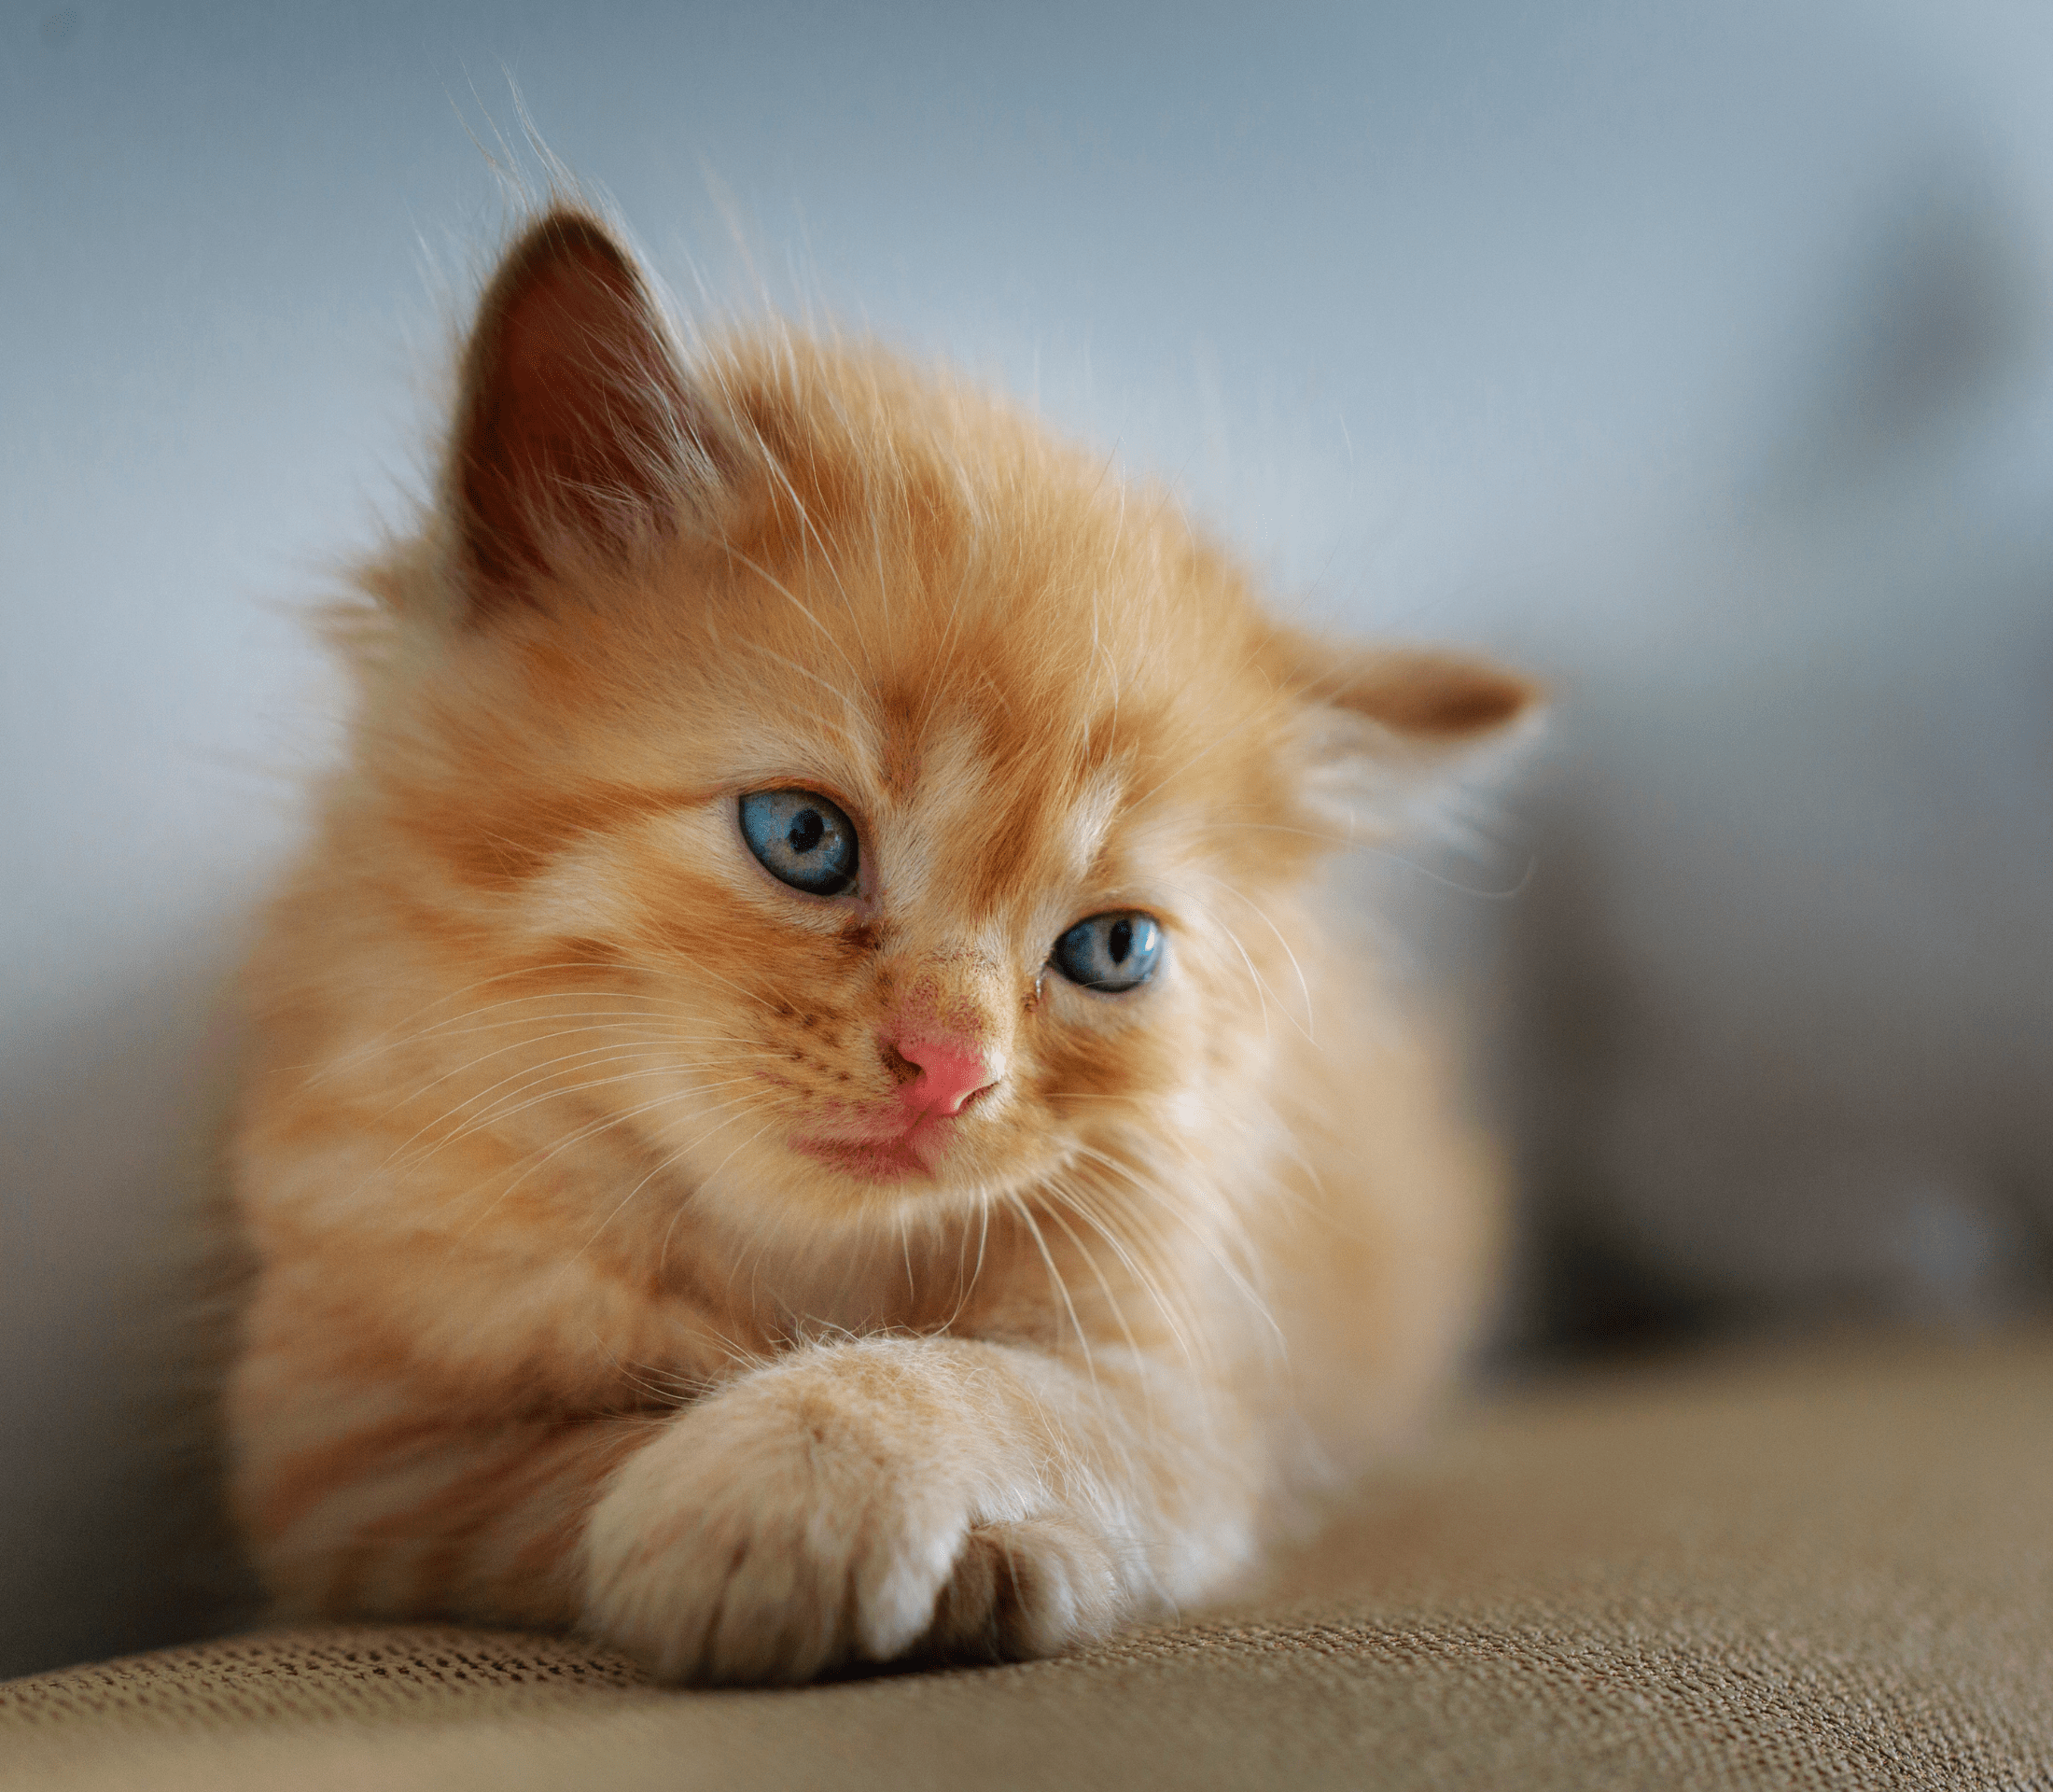 Ginger kitten with blue eyes posing cute